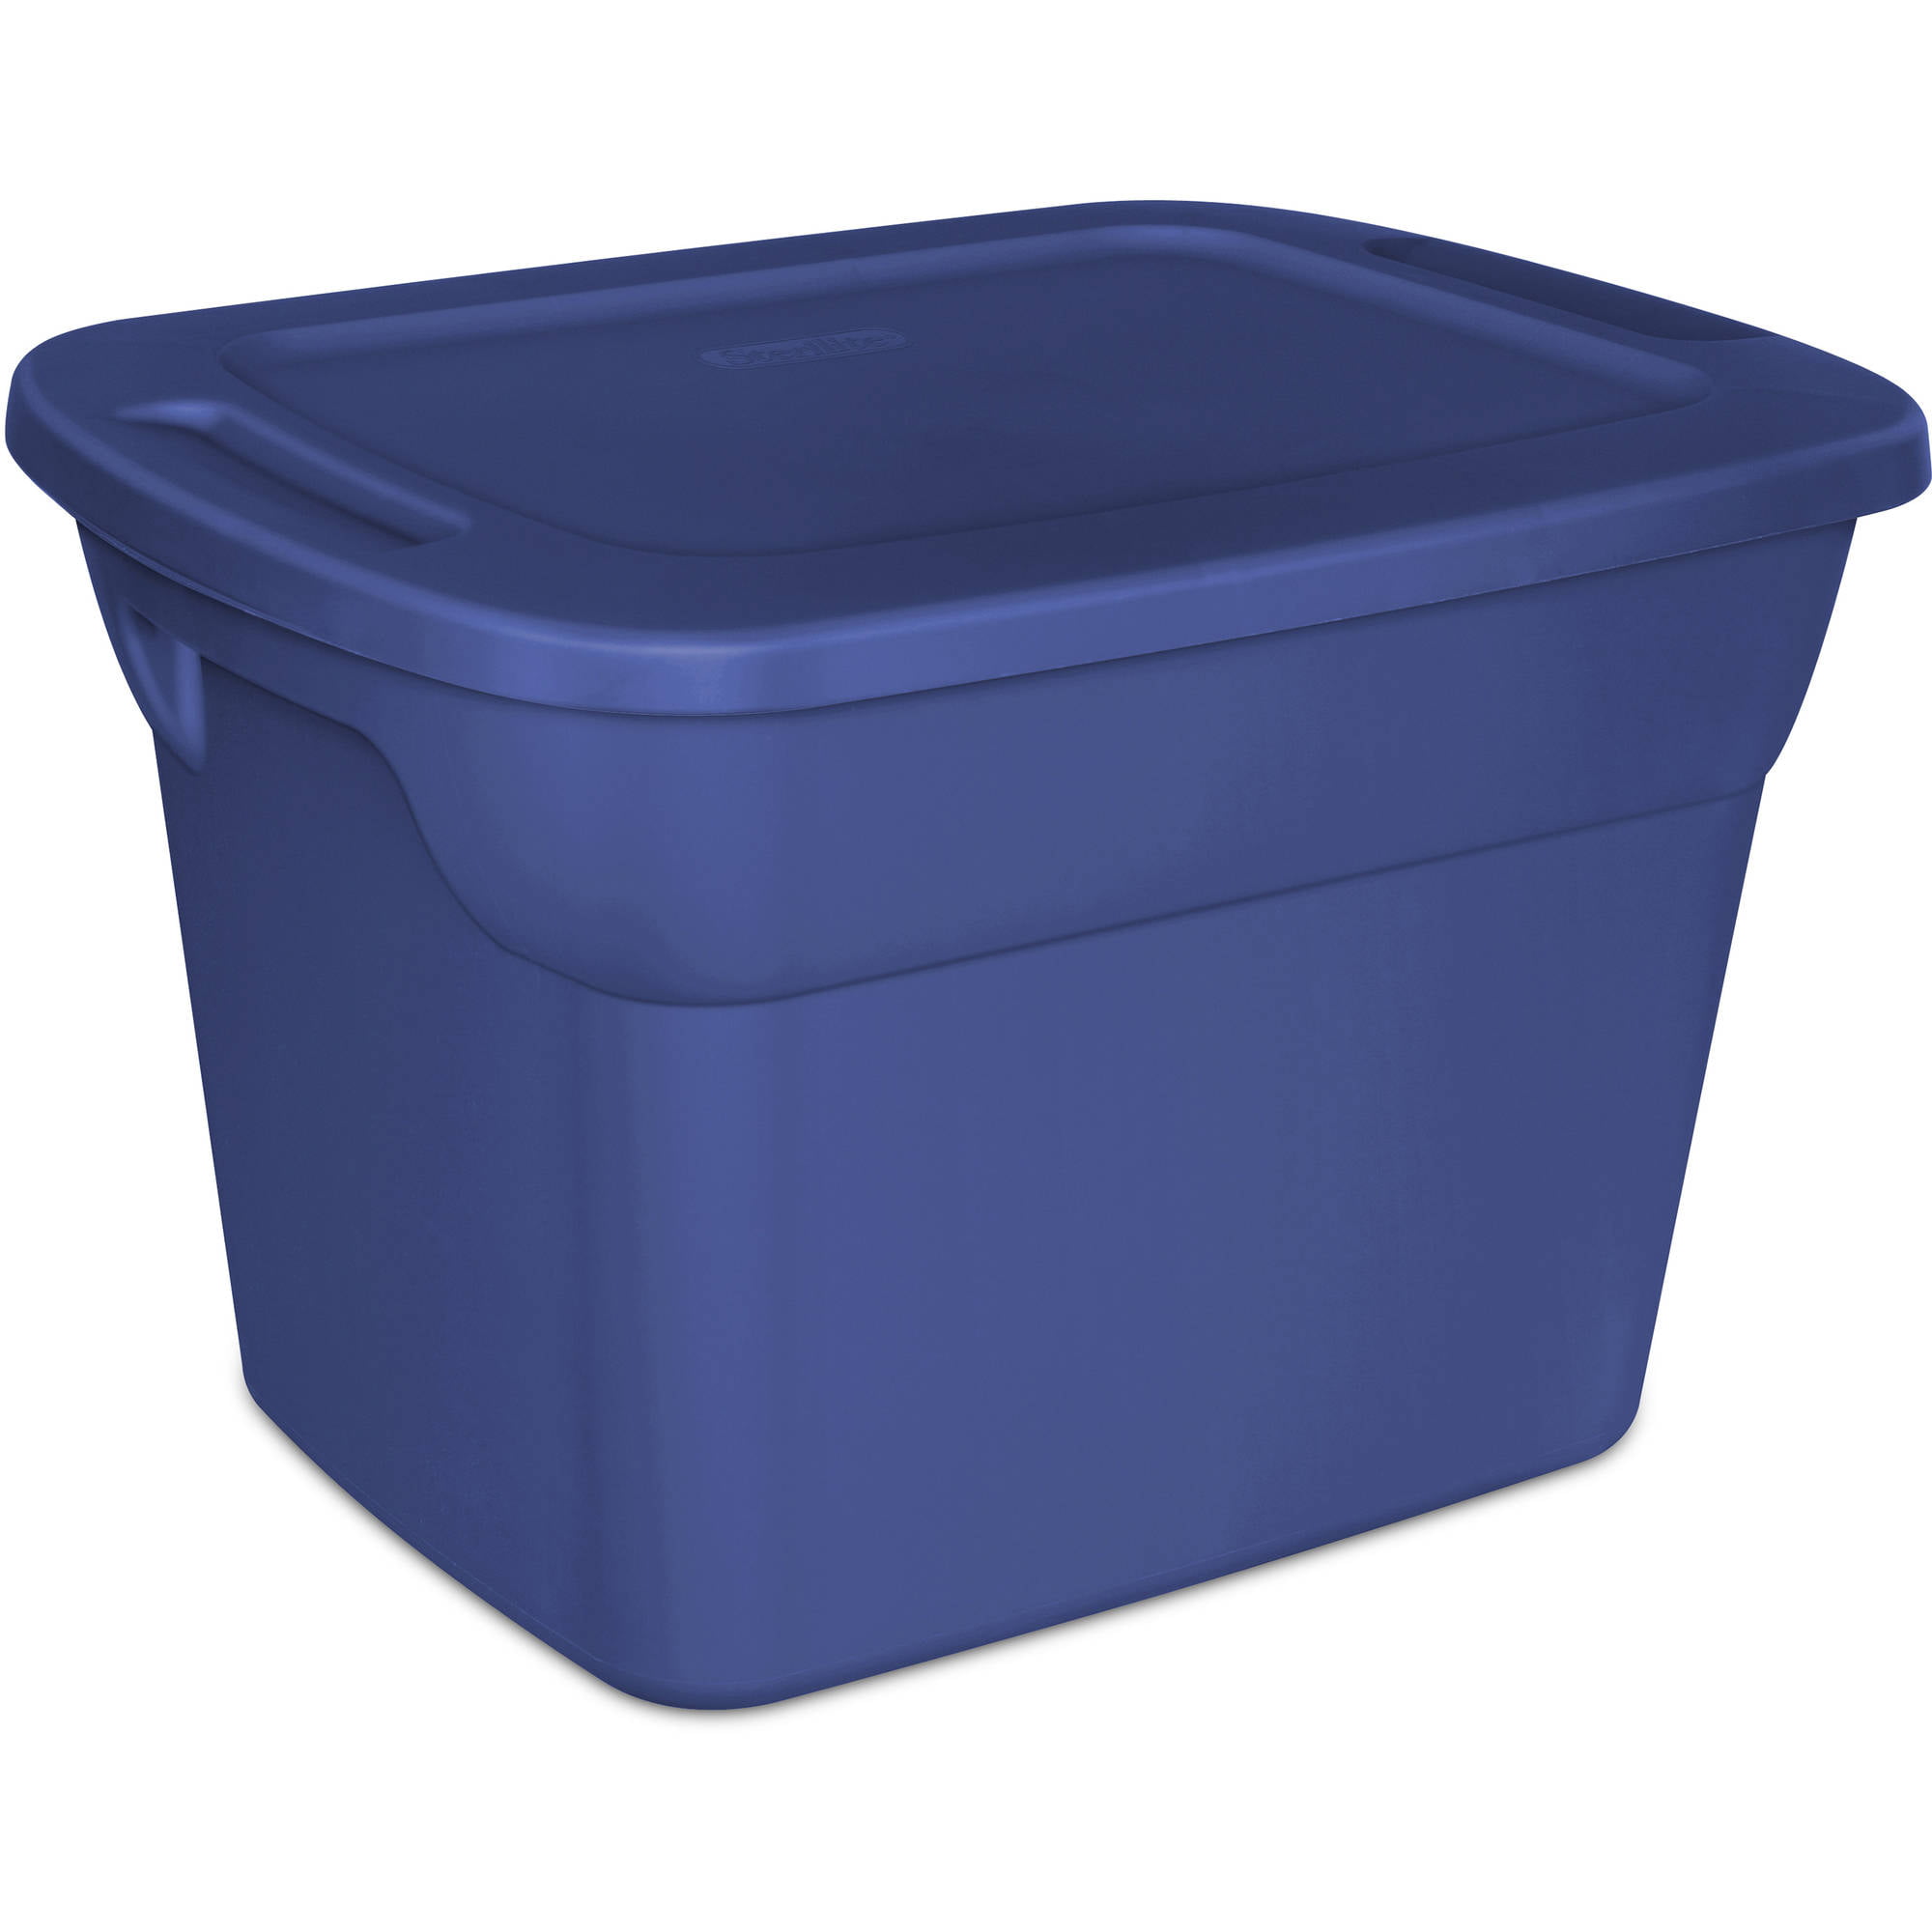 Sterilite Plastic 18 Gallon Tote Box Stadium Blue Set of 8